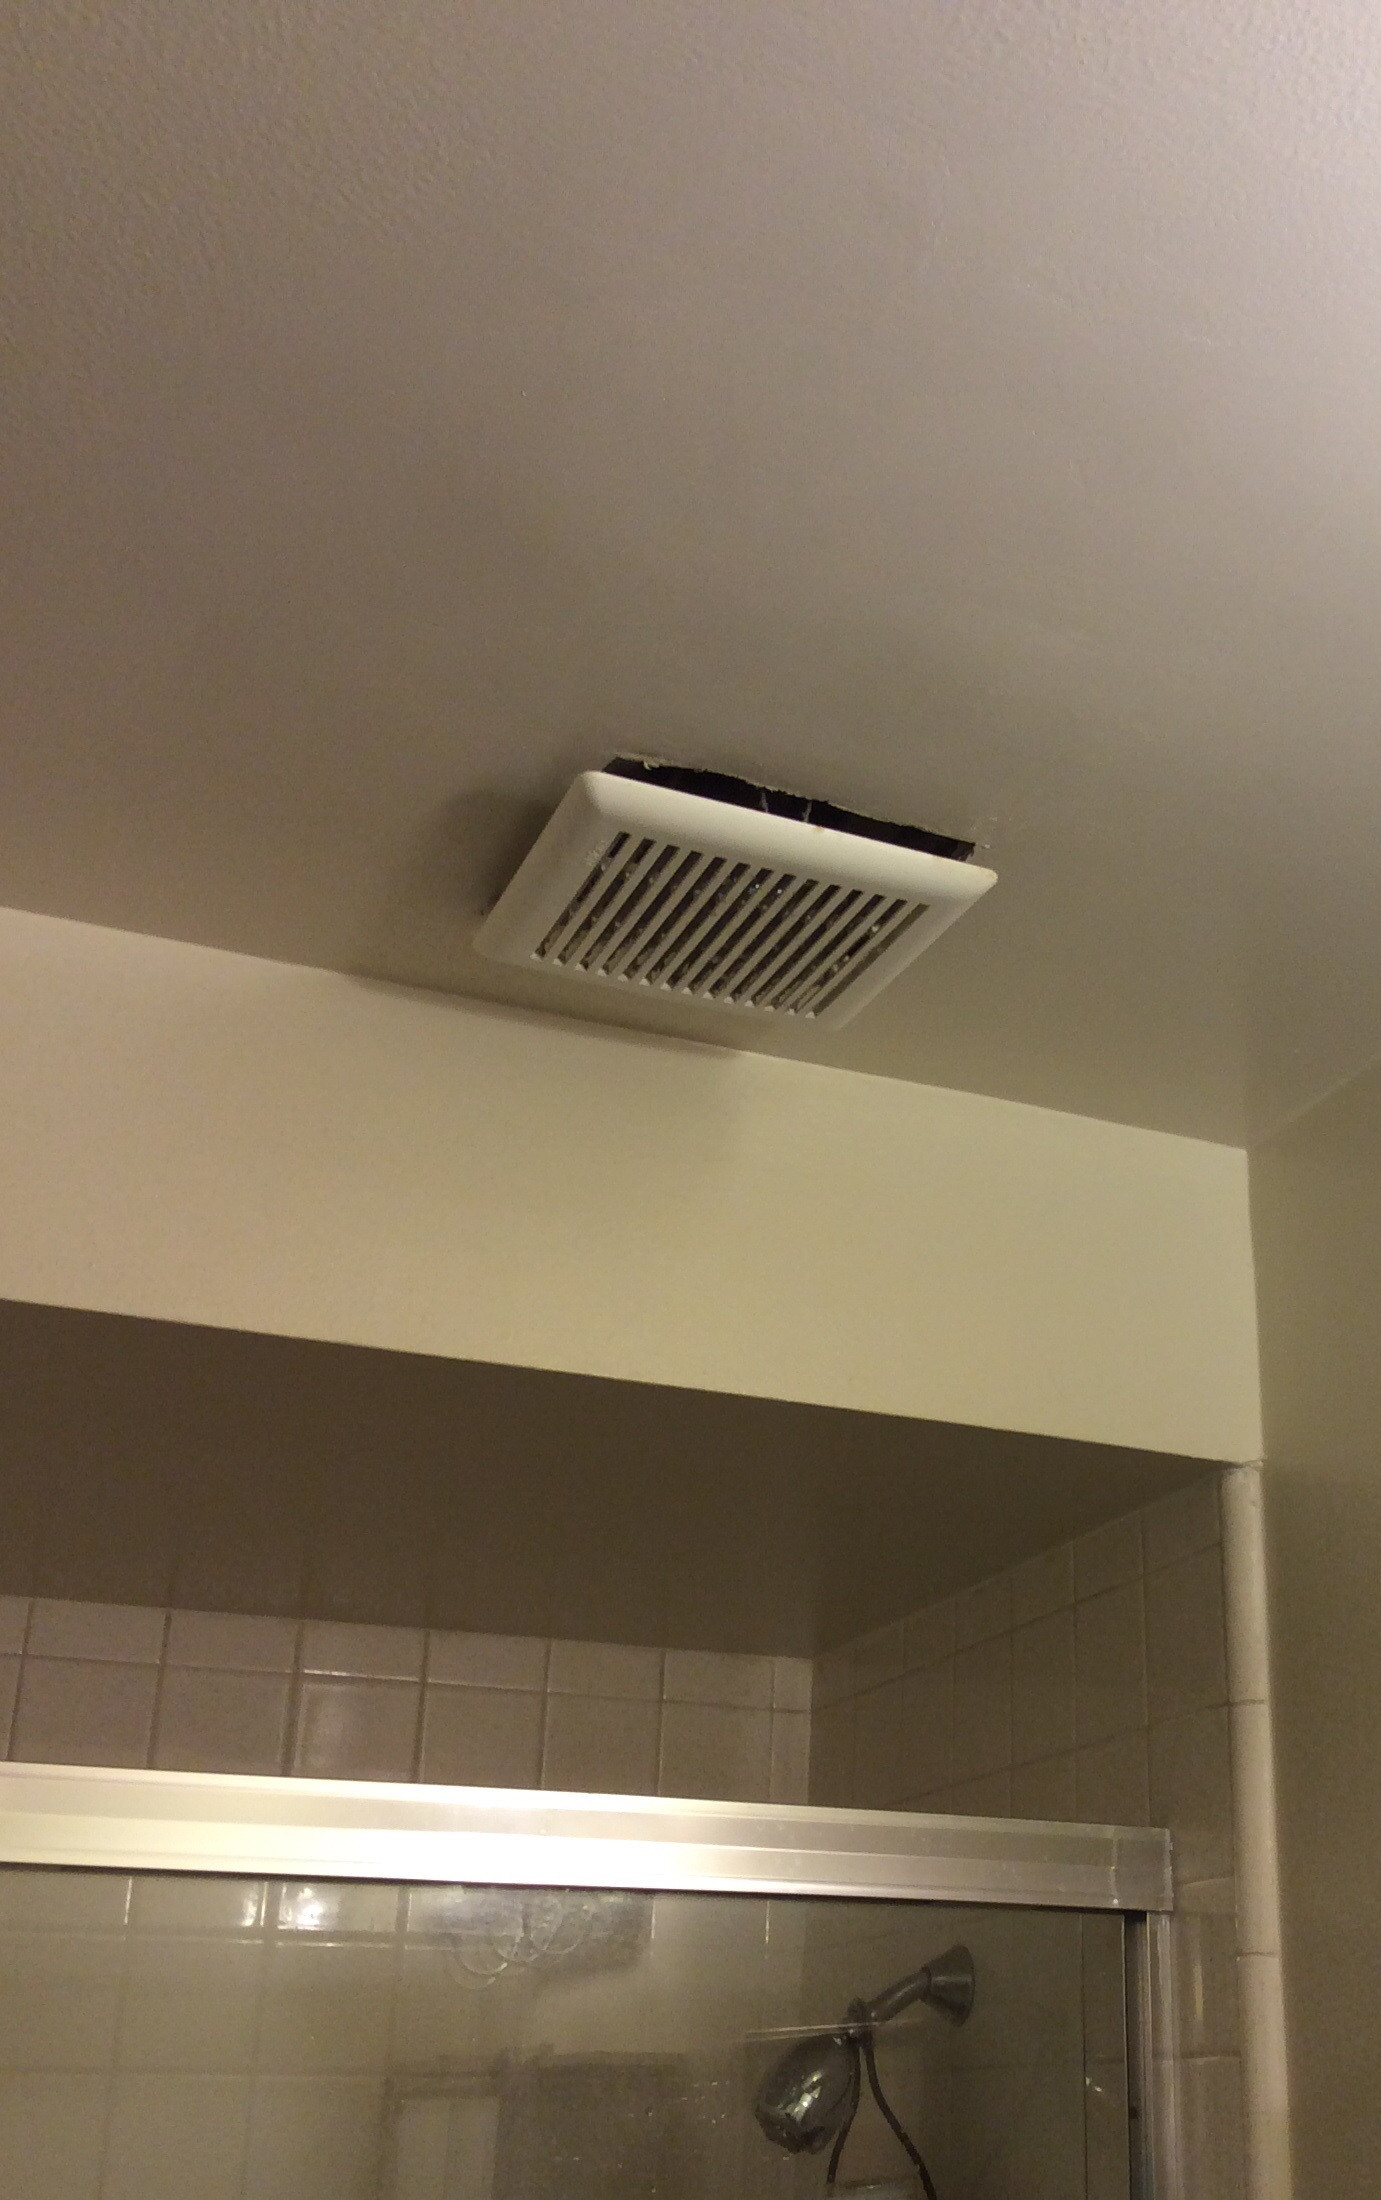 Exhaust Fan In Bathroom
 bathroom Is it normal for an exhaust fan cover to hang